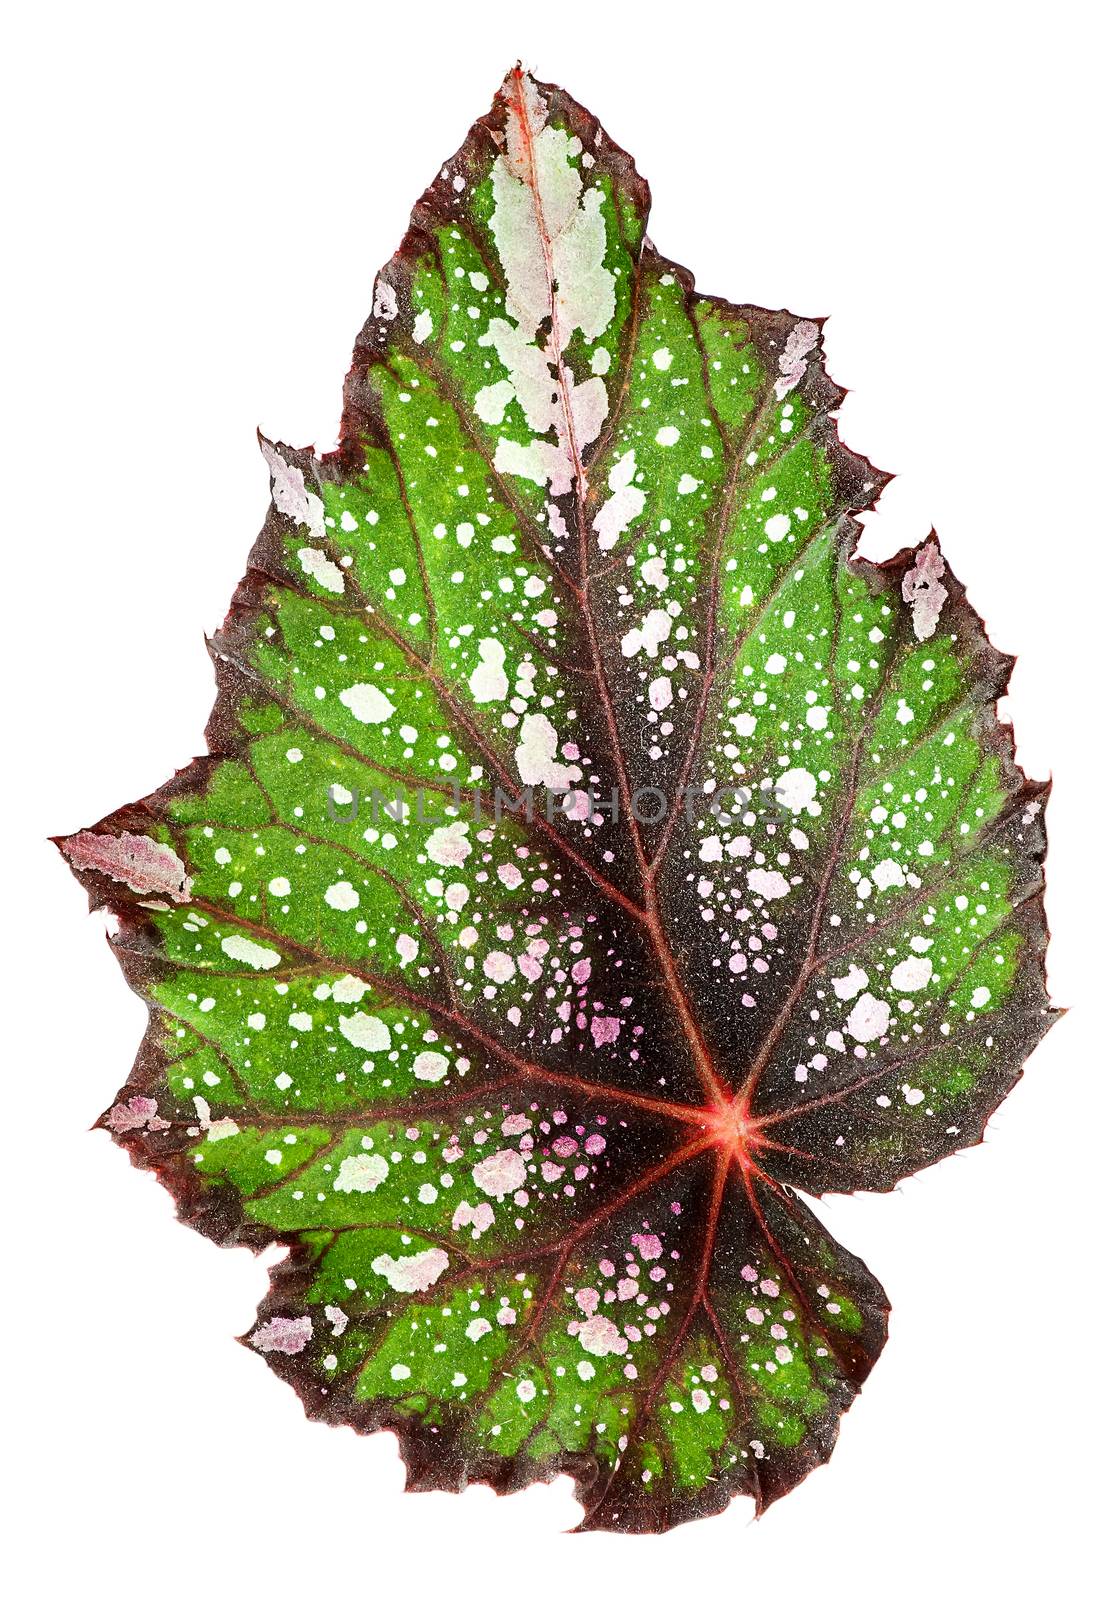 Begonia leaf vertically by Cipariss